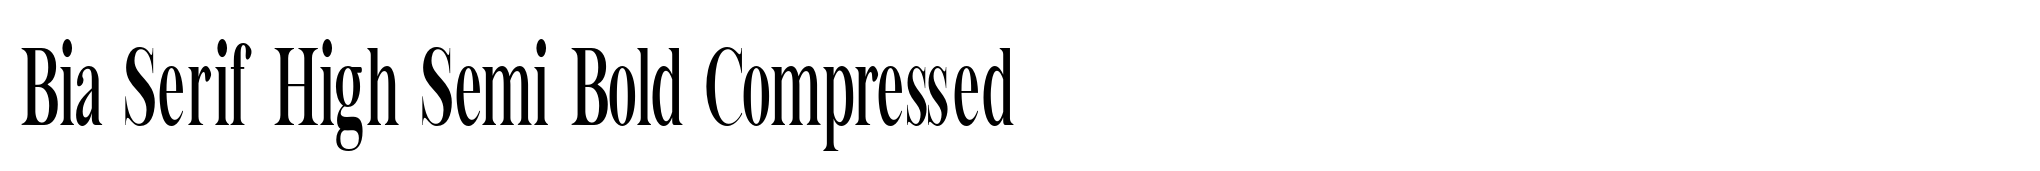 Bia Serif High Semi Bold Compressed image